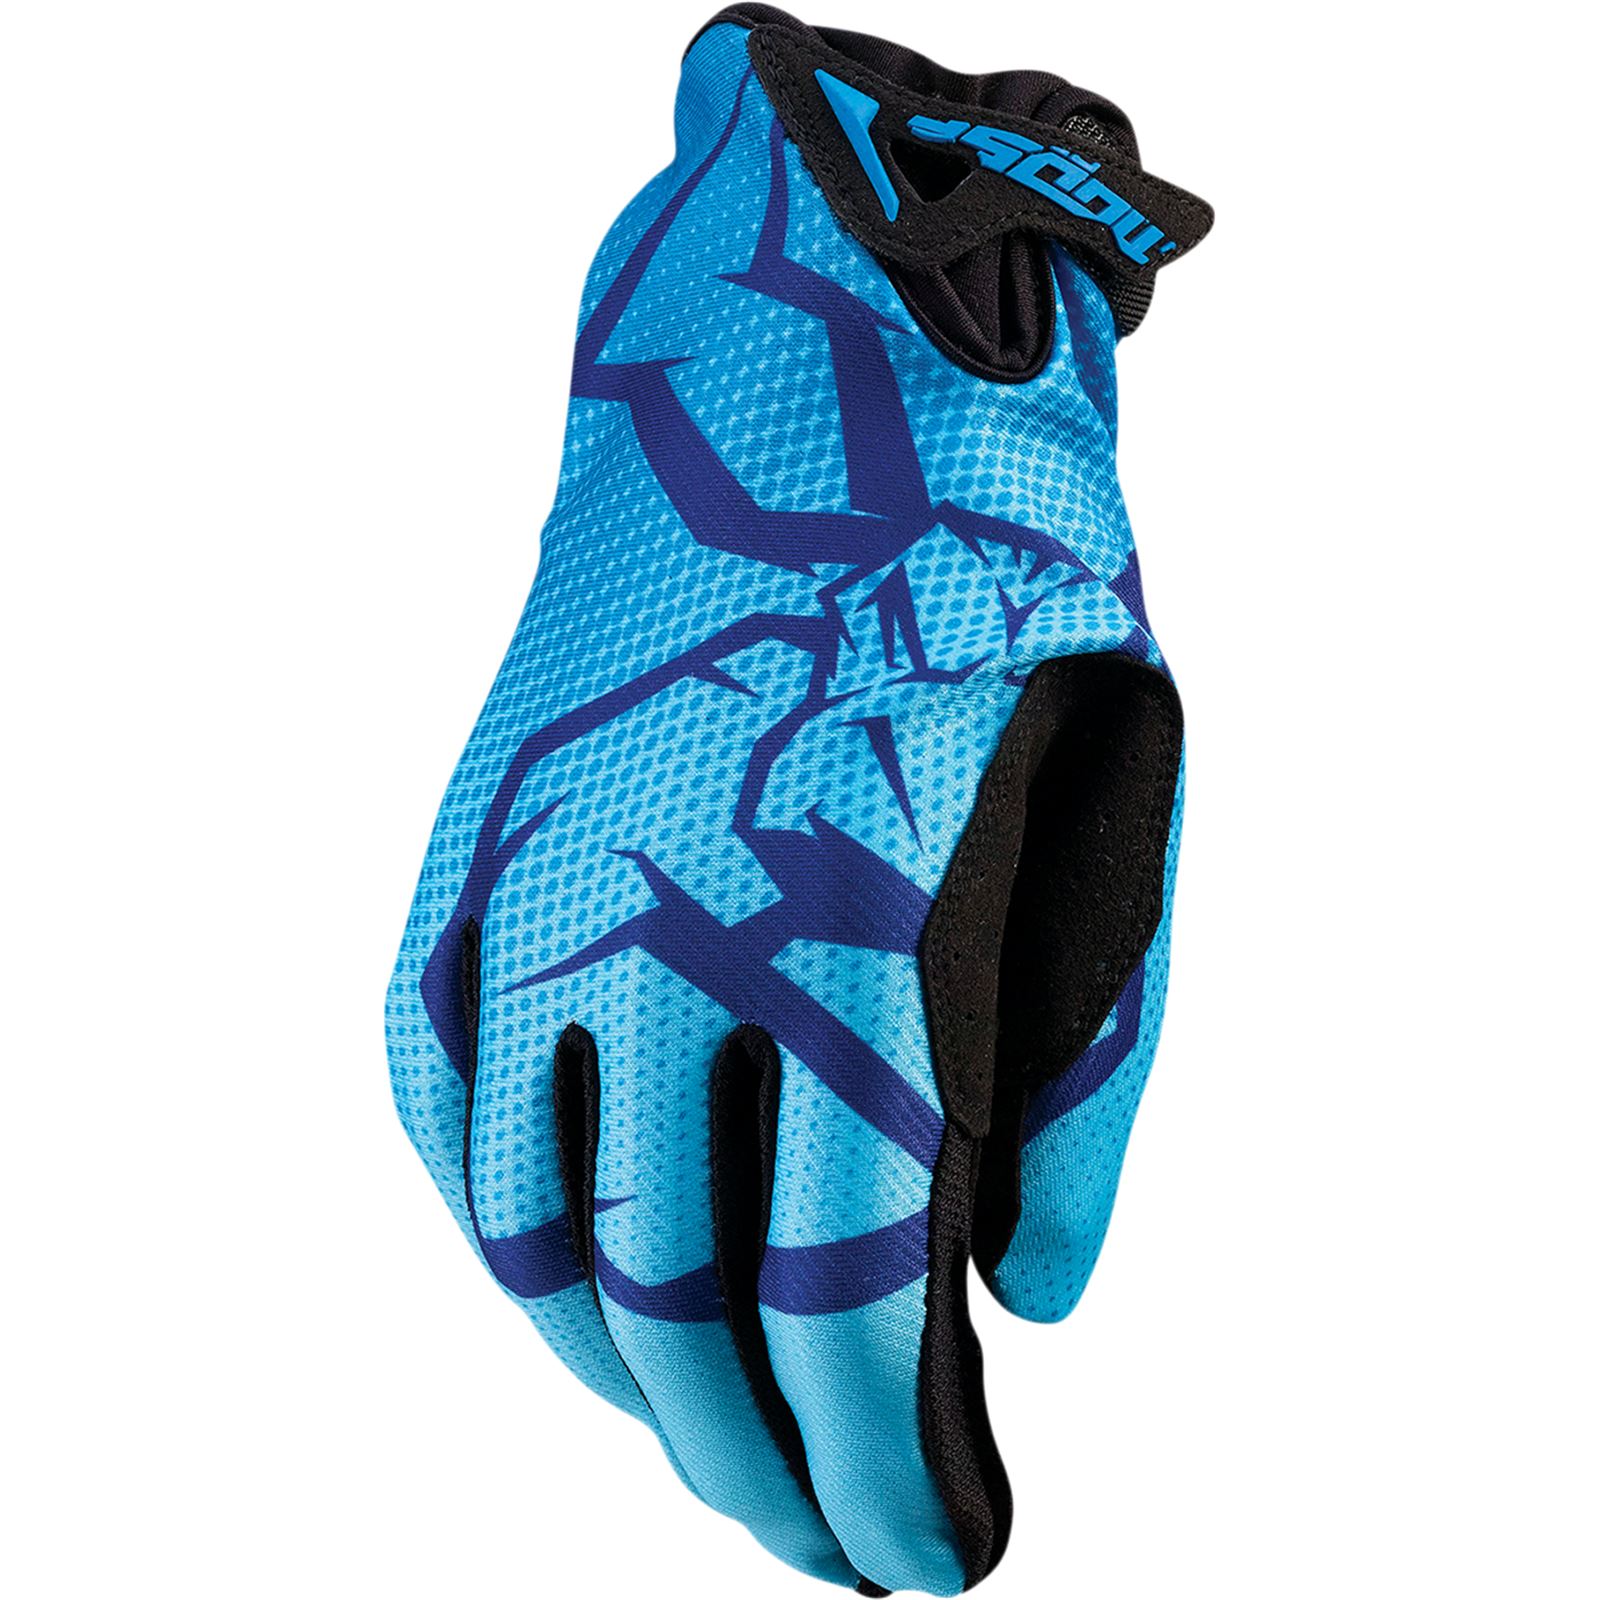 Moose Racing Agroid Pro Gloves - Blue - Large